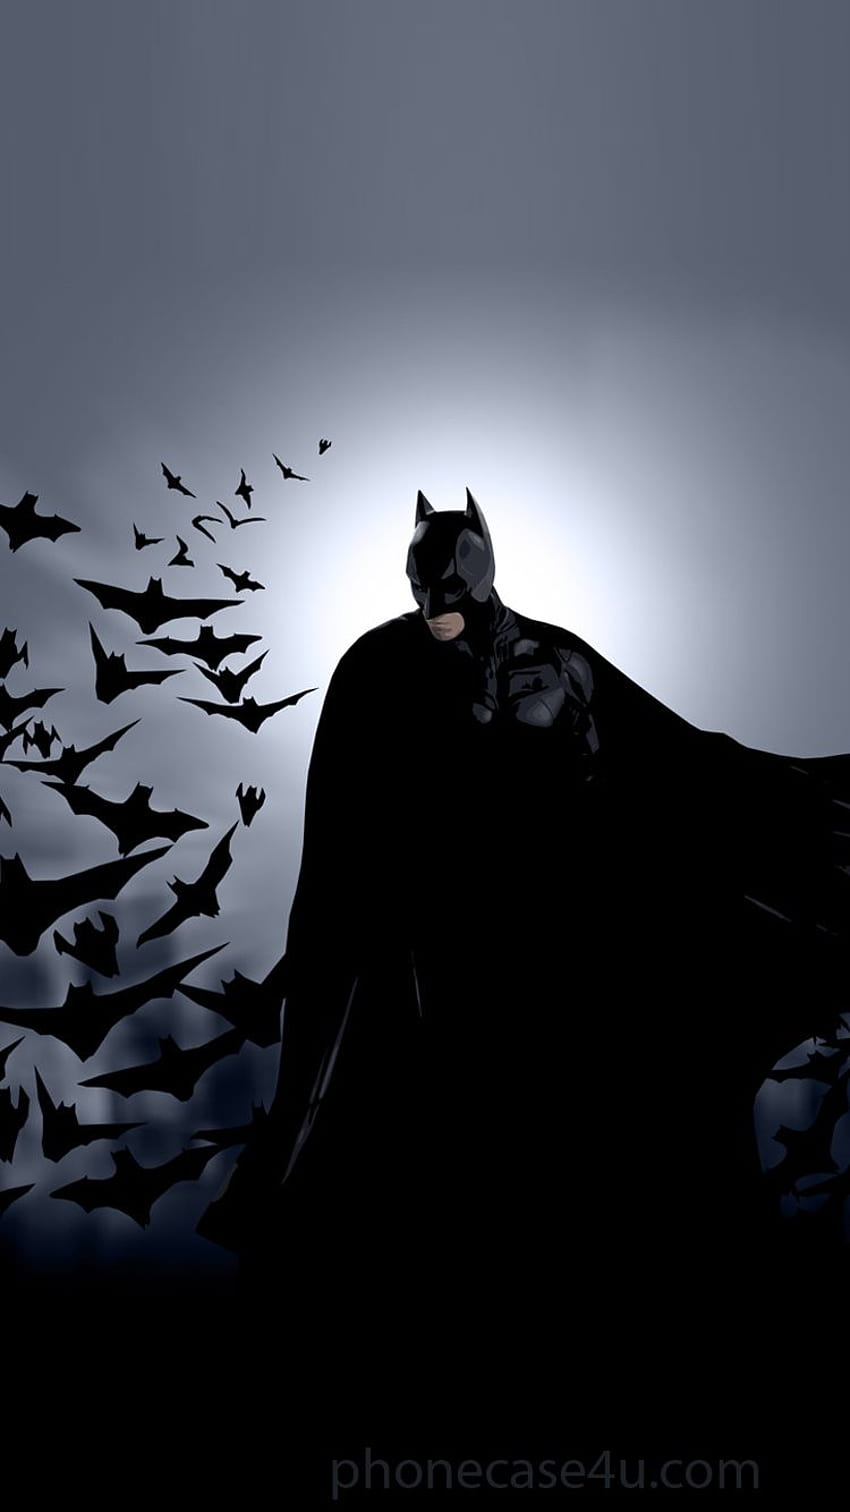 Batman iPhone - Gambar Ngetrend dan VIRAL, Impresionante Batman fondo de pantalla del teléfono